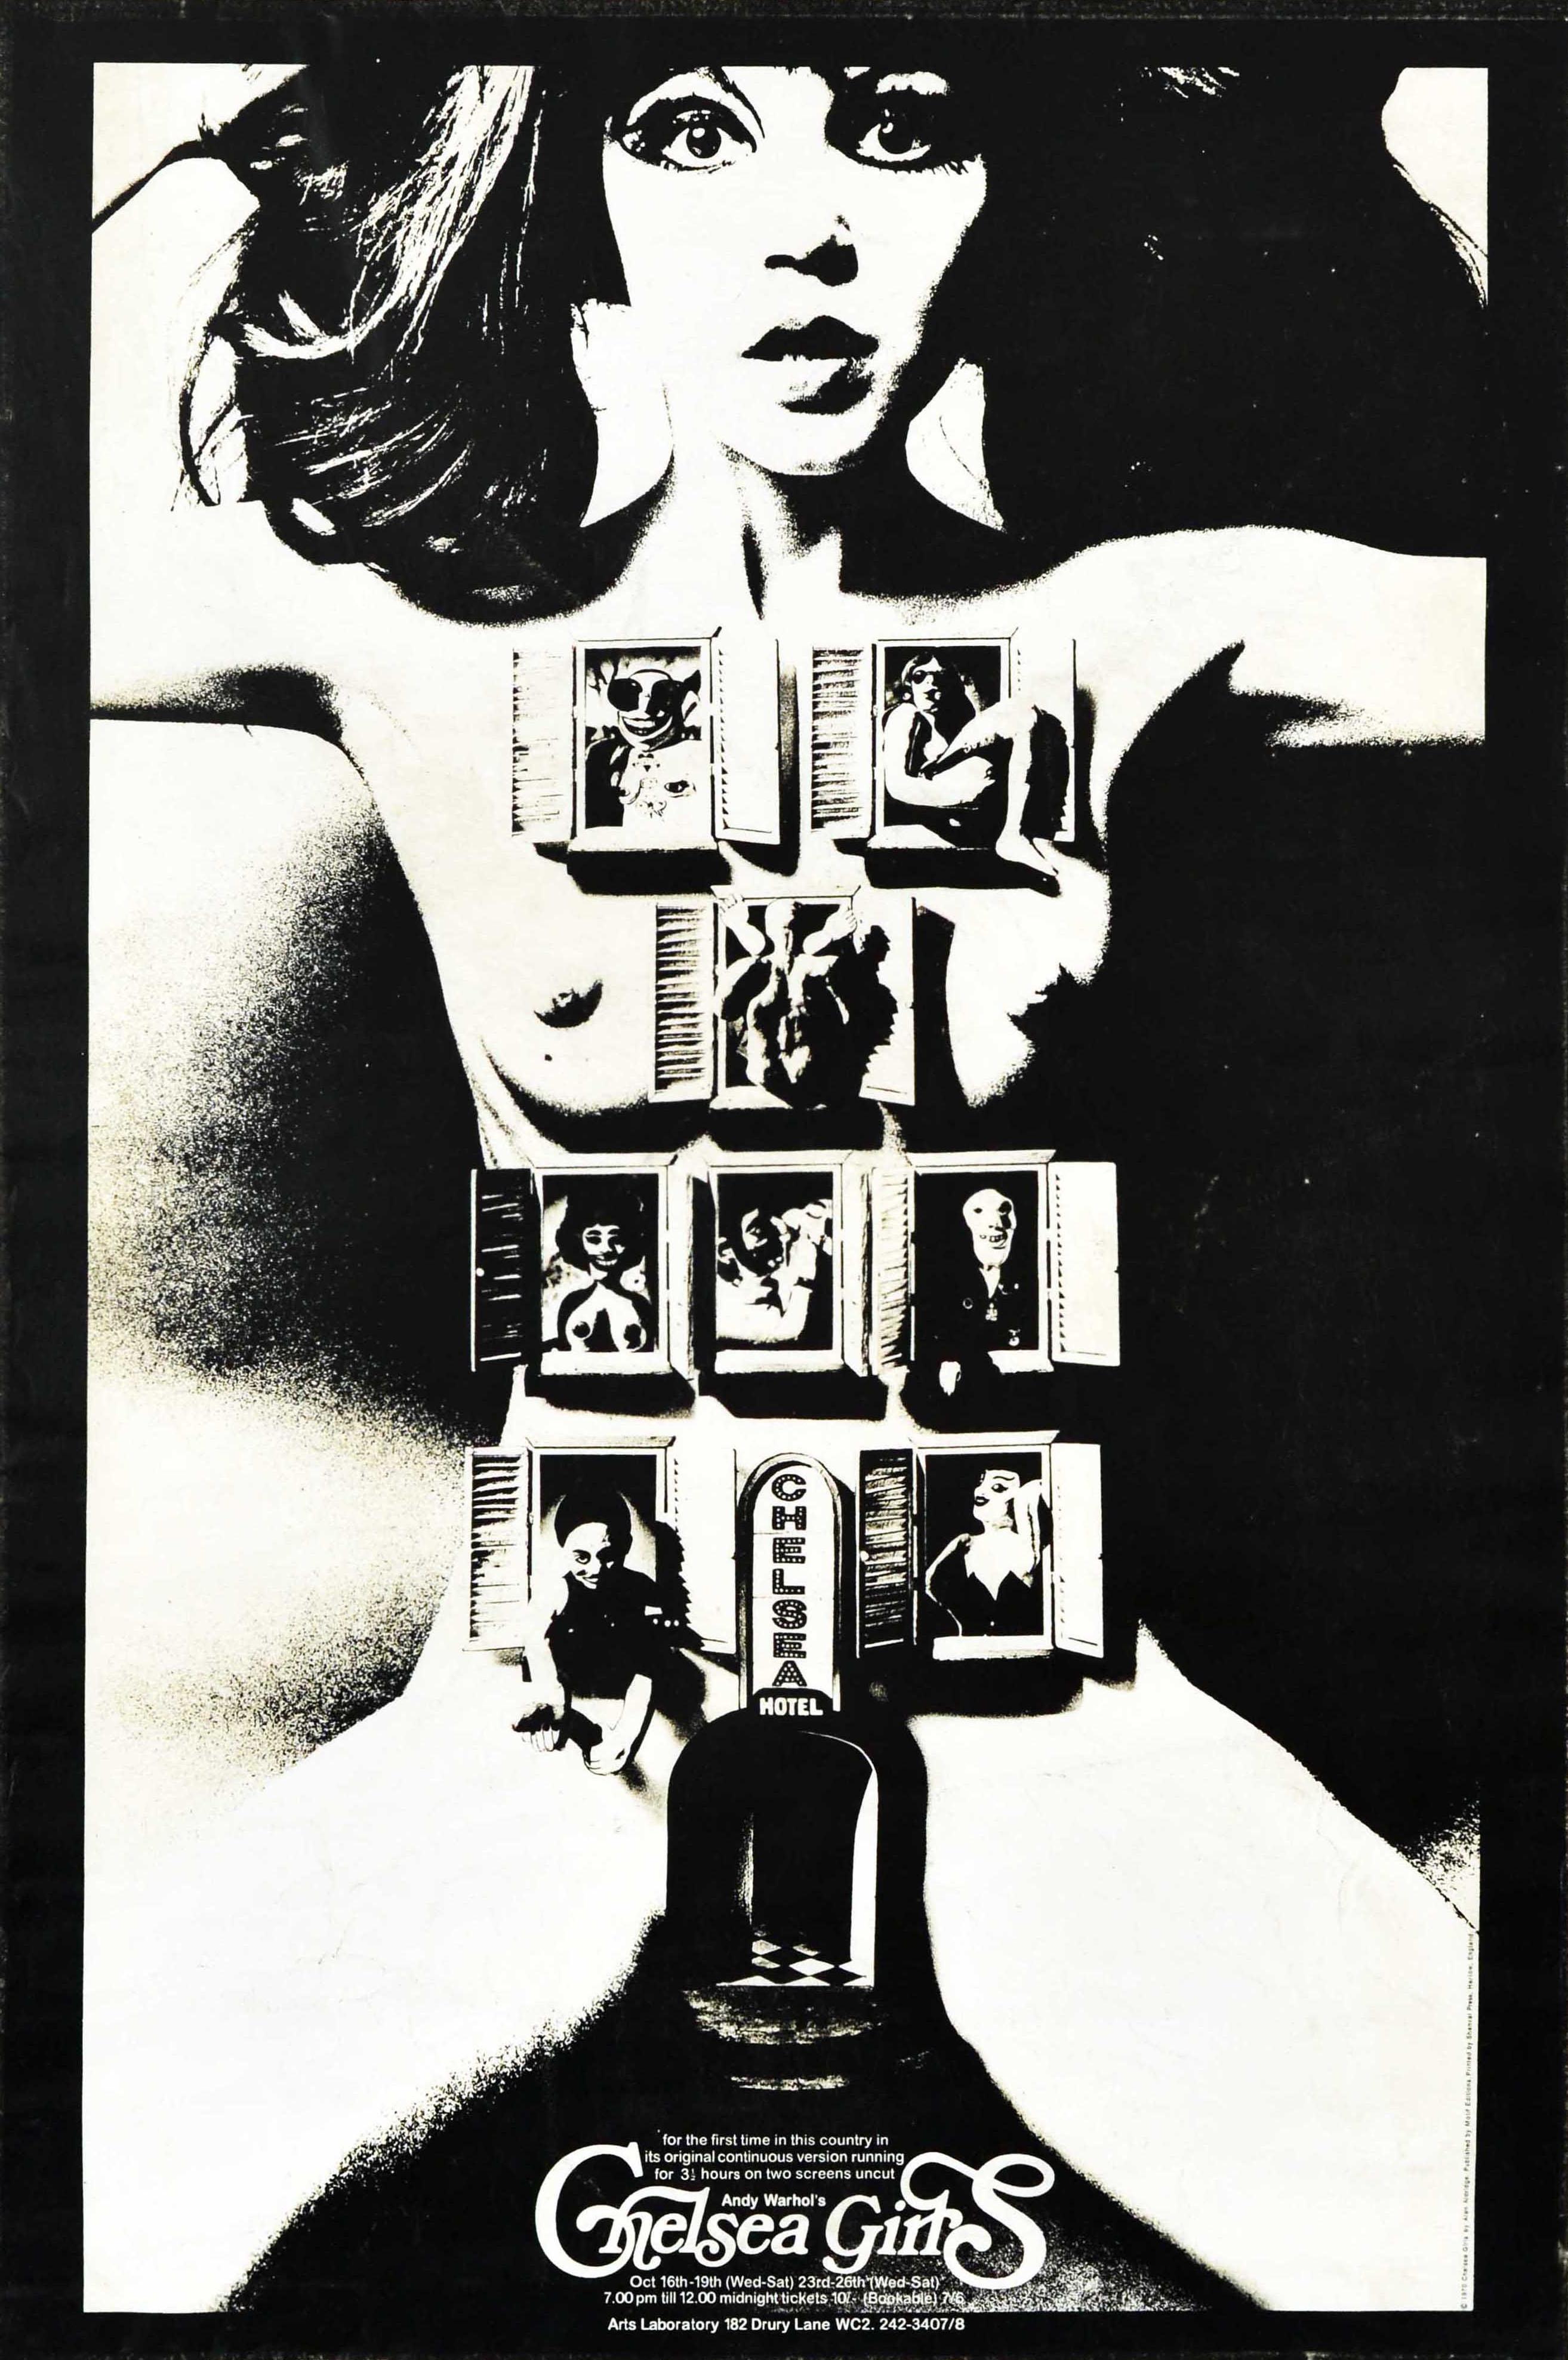 Alan Aldridge Print - Original Vintage Arthouse Cinema Poster Andy Warhol Chelsea Girls Avant Garde